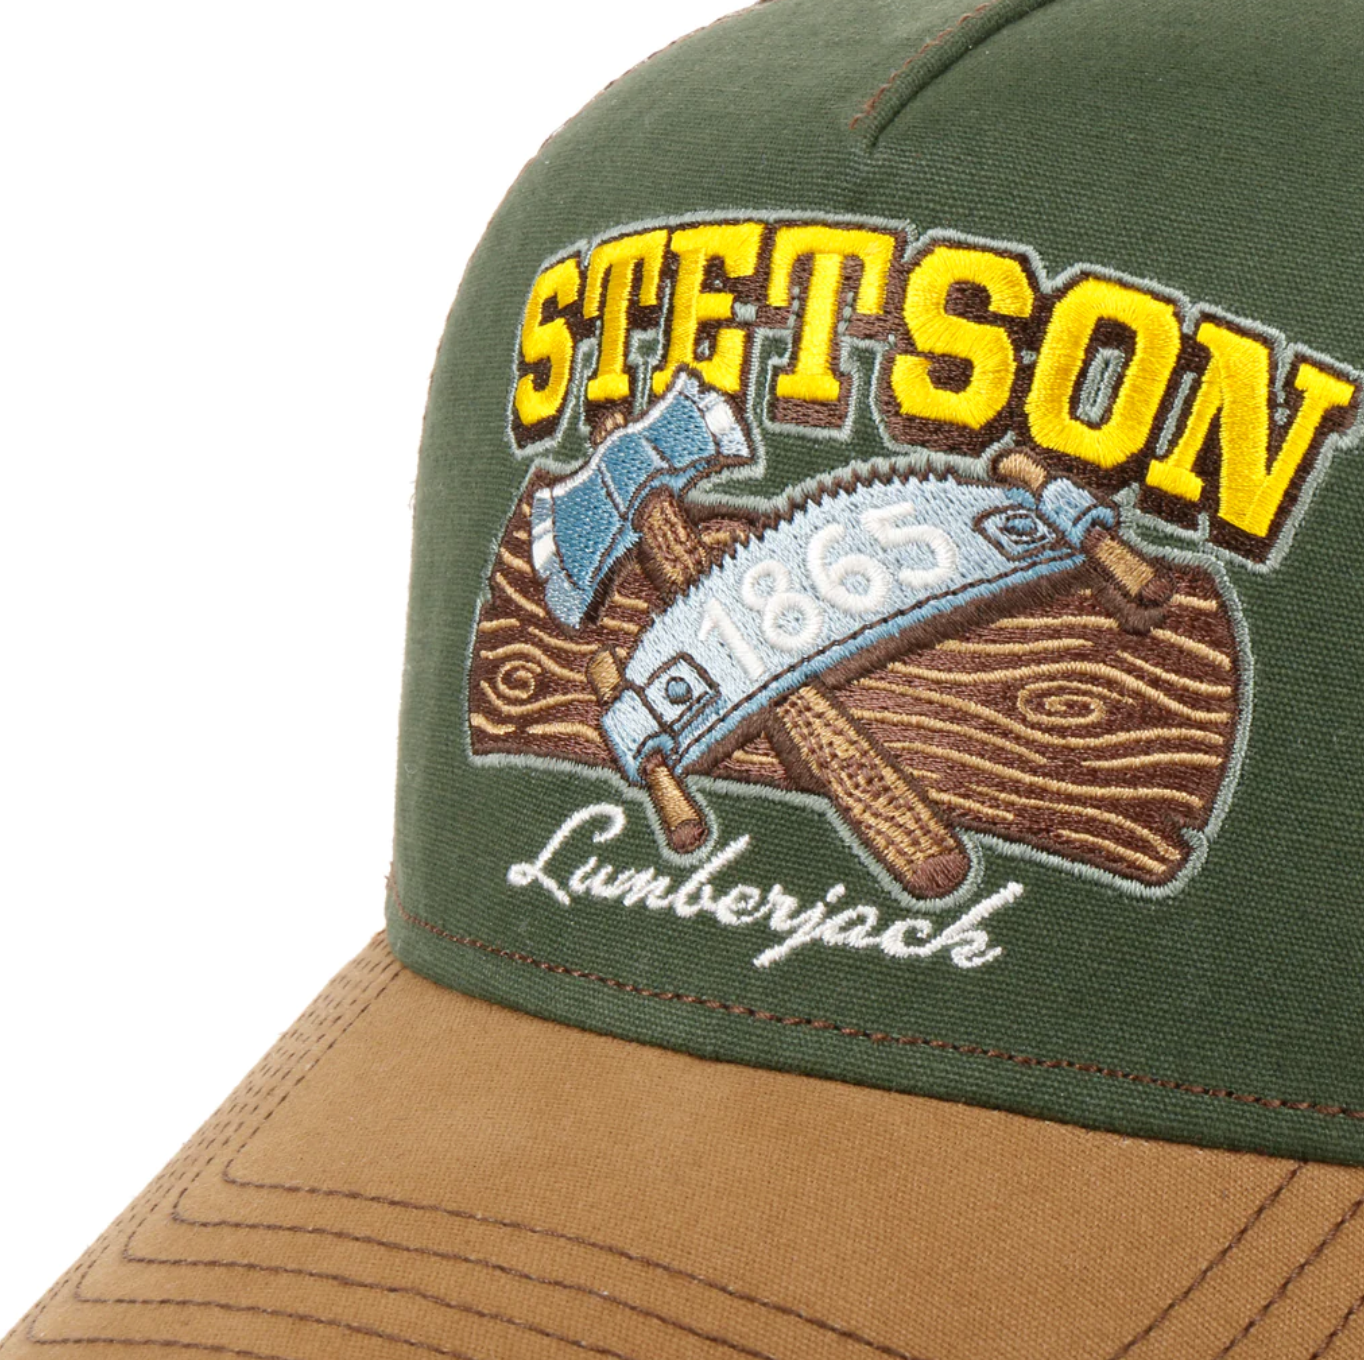 Stetson - Lumberjack Trucker Cap - Dark Green/Brown - Headz Up 